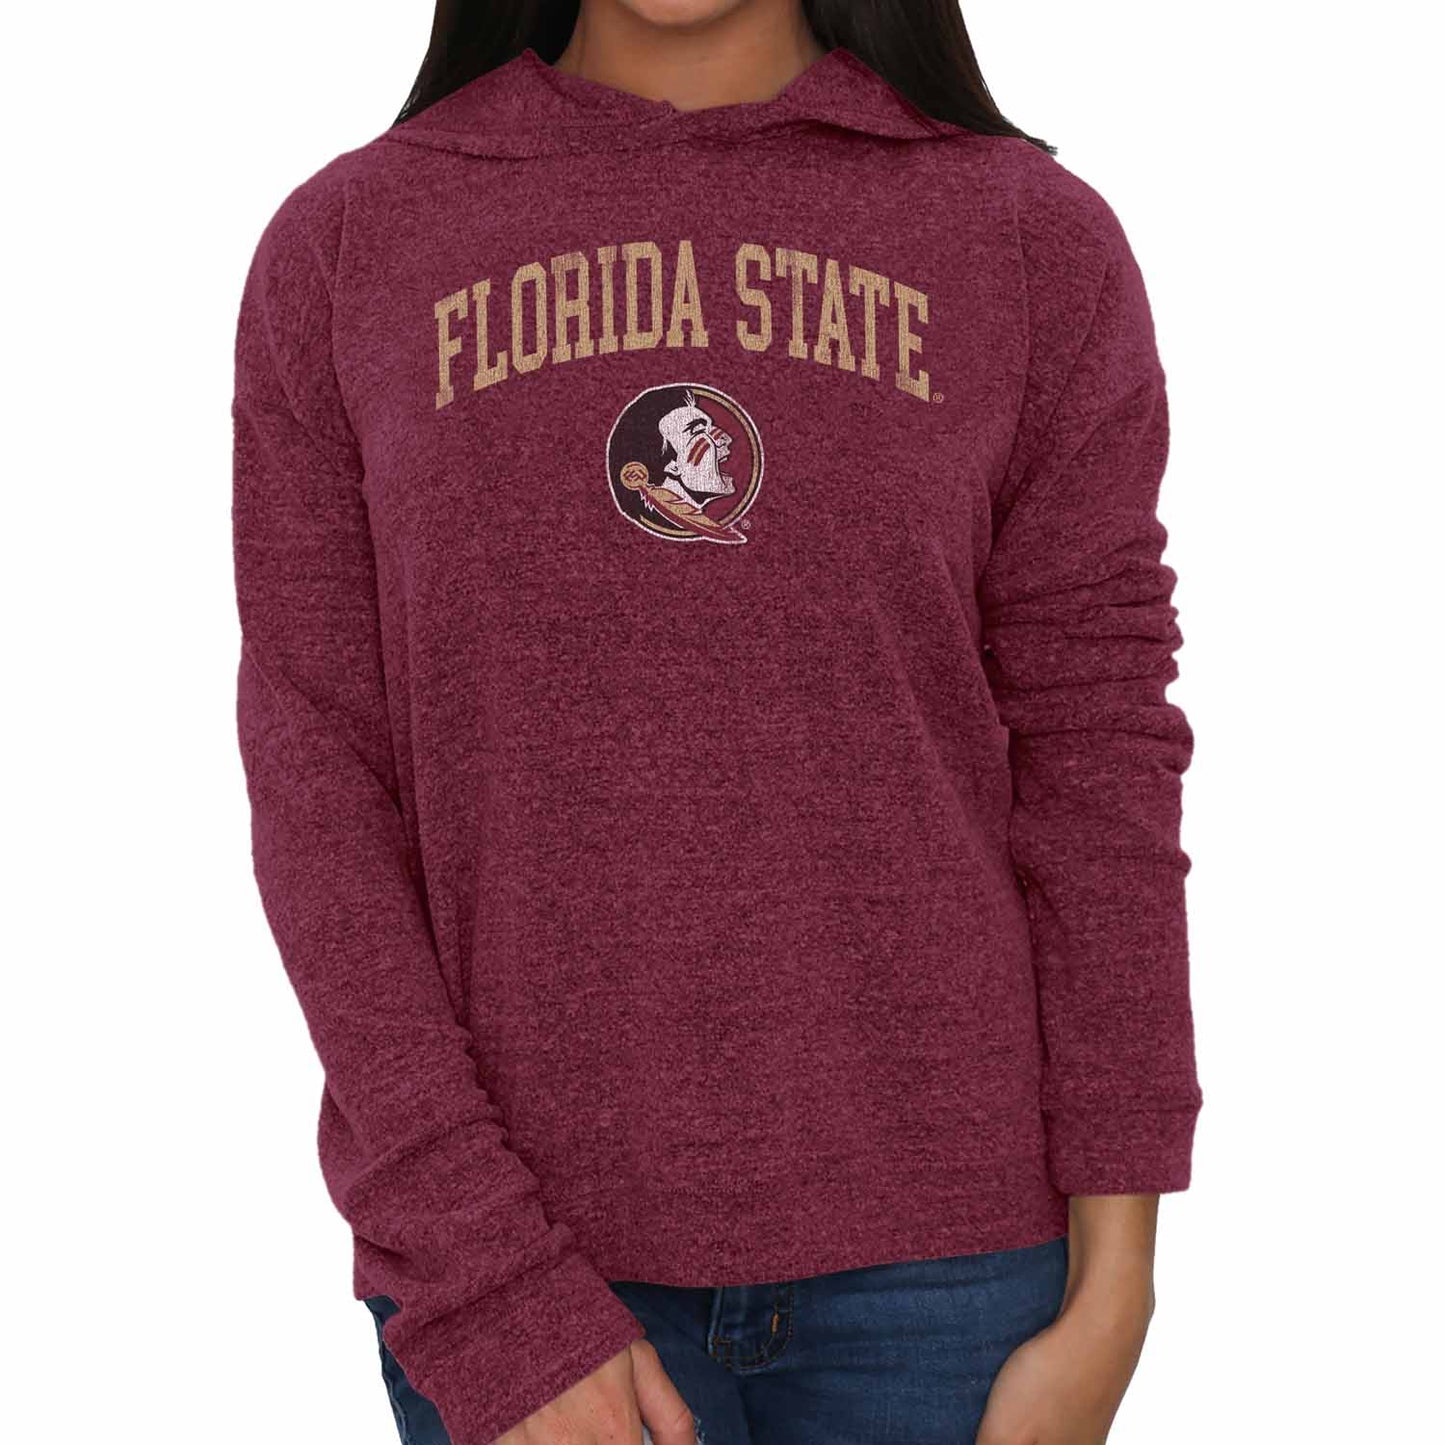 Florida State Seminoles NCAA University Women's Hoodie  - Maroon